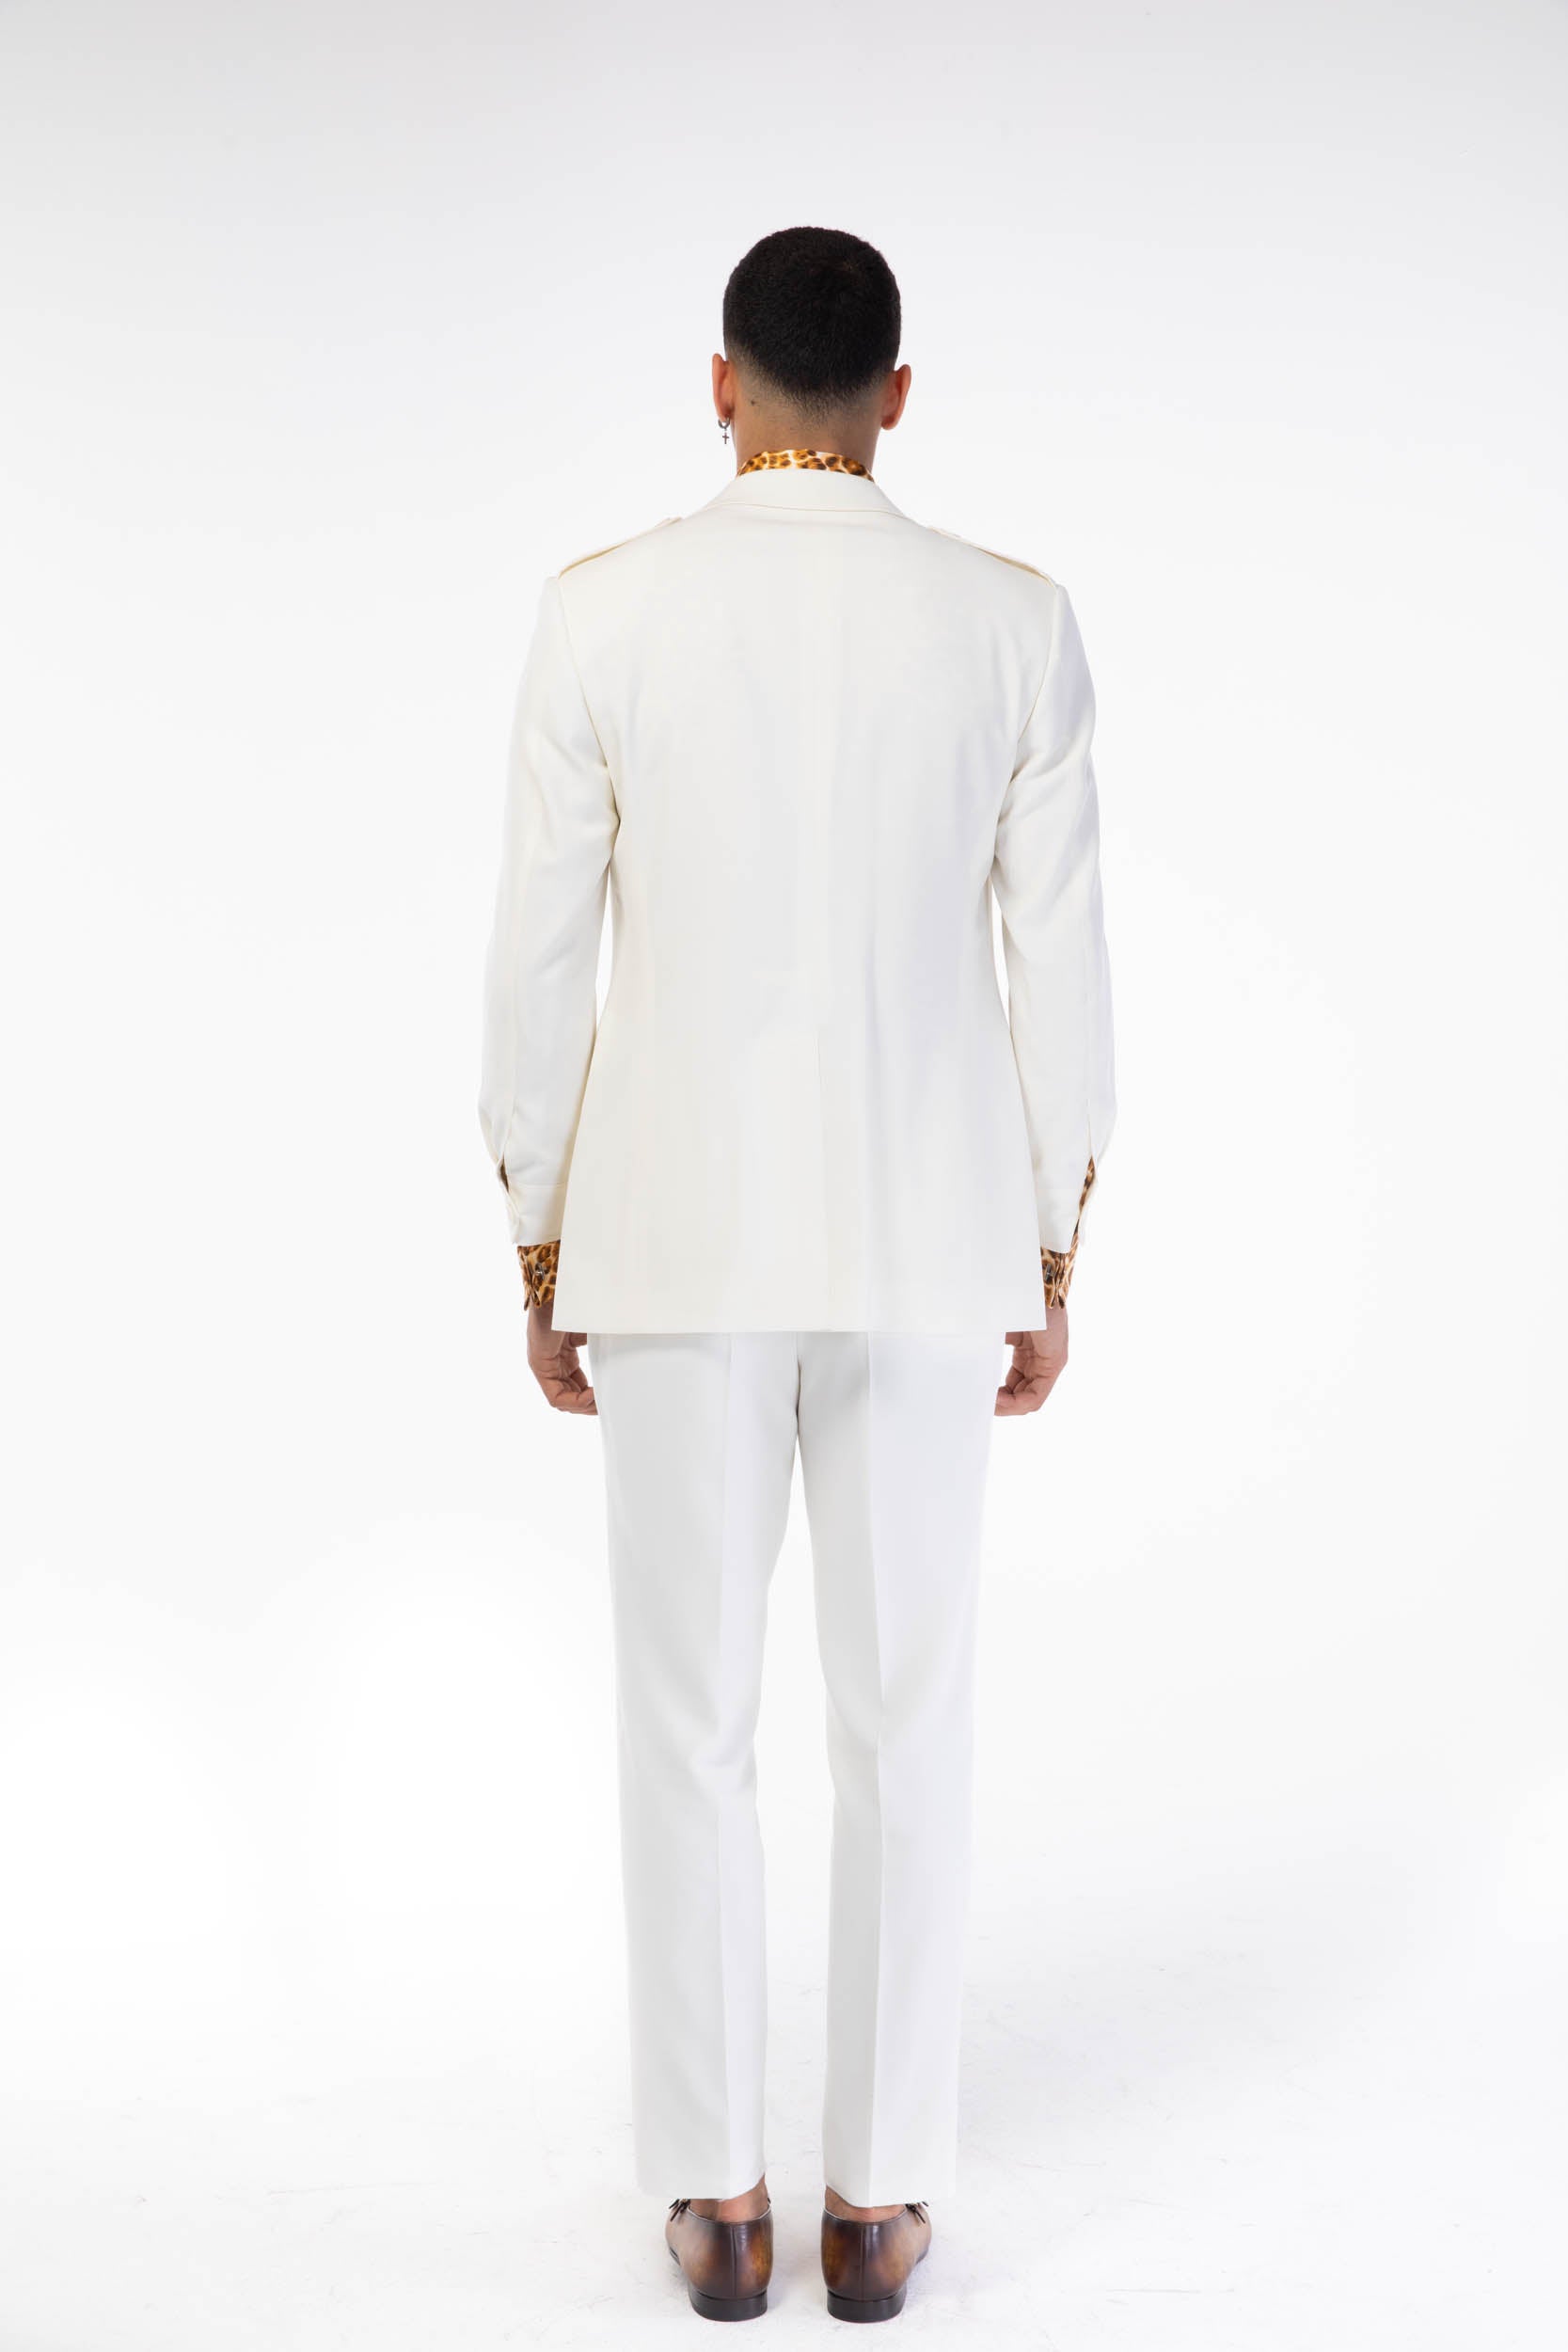 Buy Chinese Collar Cream Formal Shirt For Men Online @ Best Prices in India  | Uniform Bucket | UNIFORM BUCKET